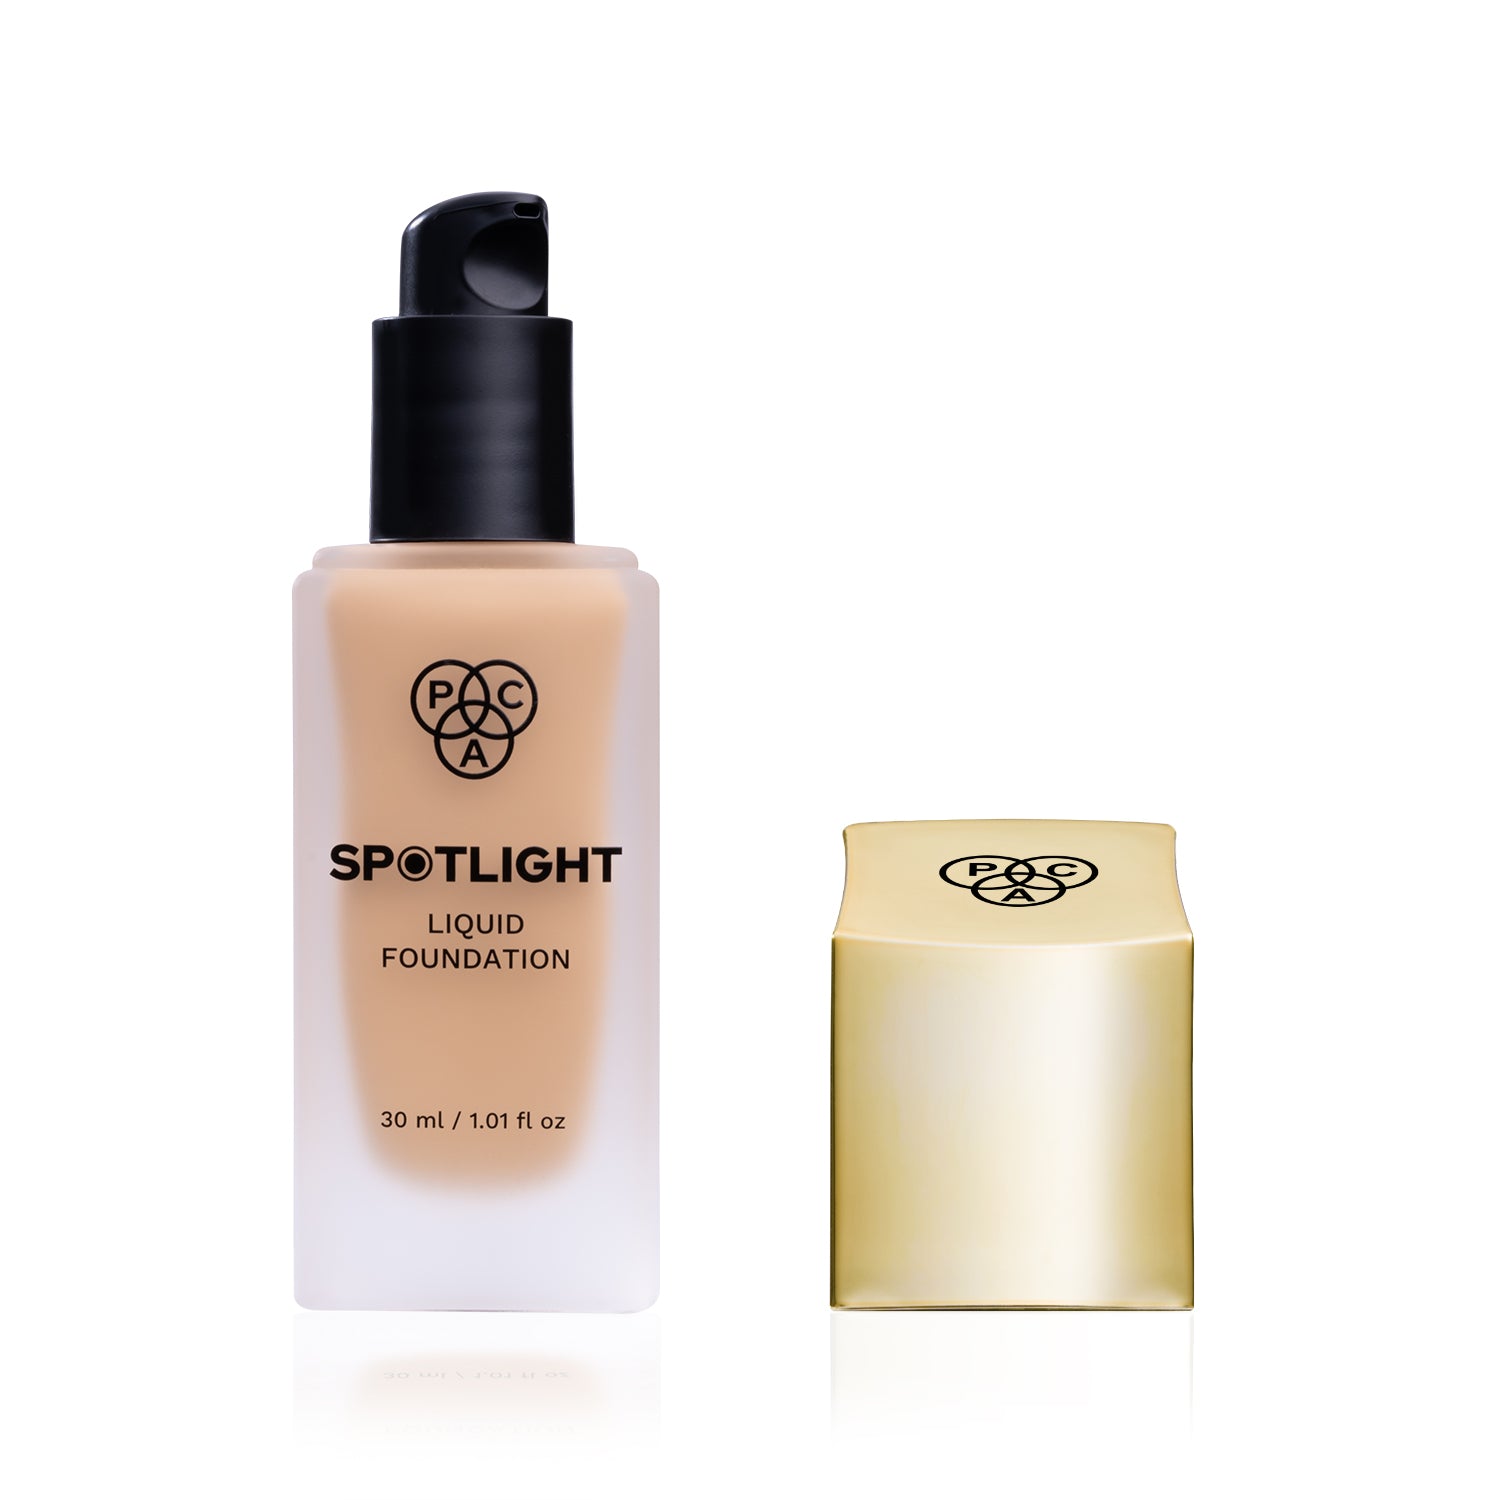 PAC Cosmetics Spotlight Liquid Foundation (30 ml) #Color_07 Cashew Crème